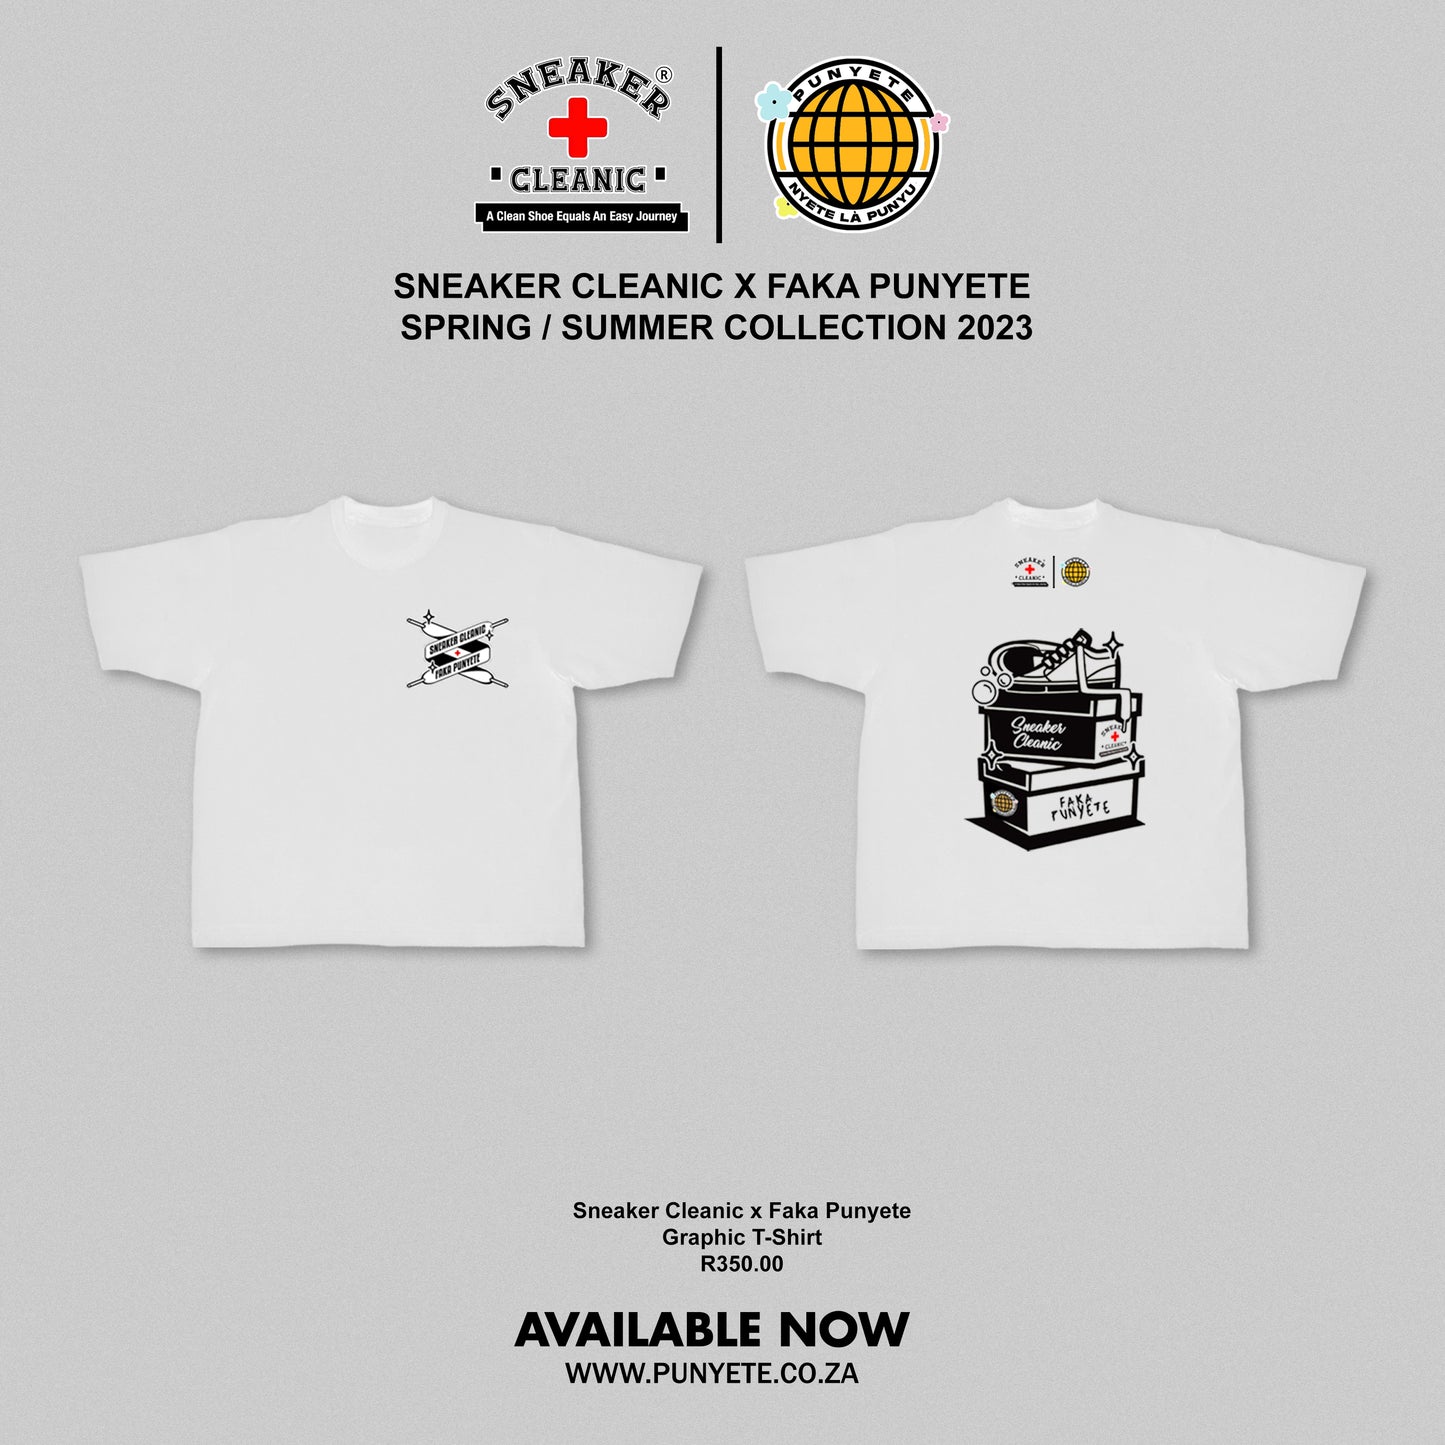 Sneaker Cleanic x Faka Punyete Mabox T-Shirt